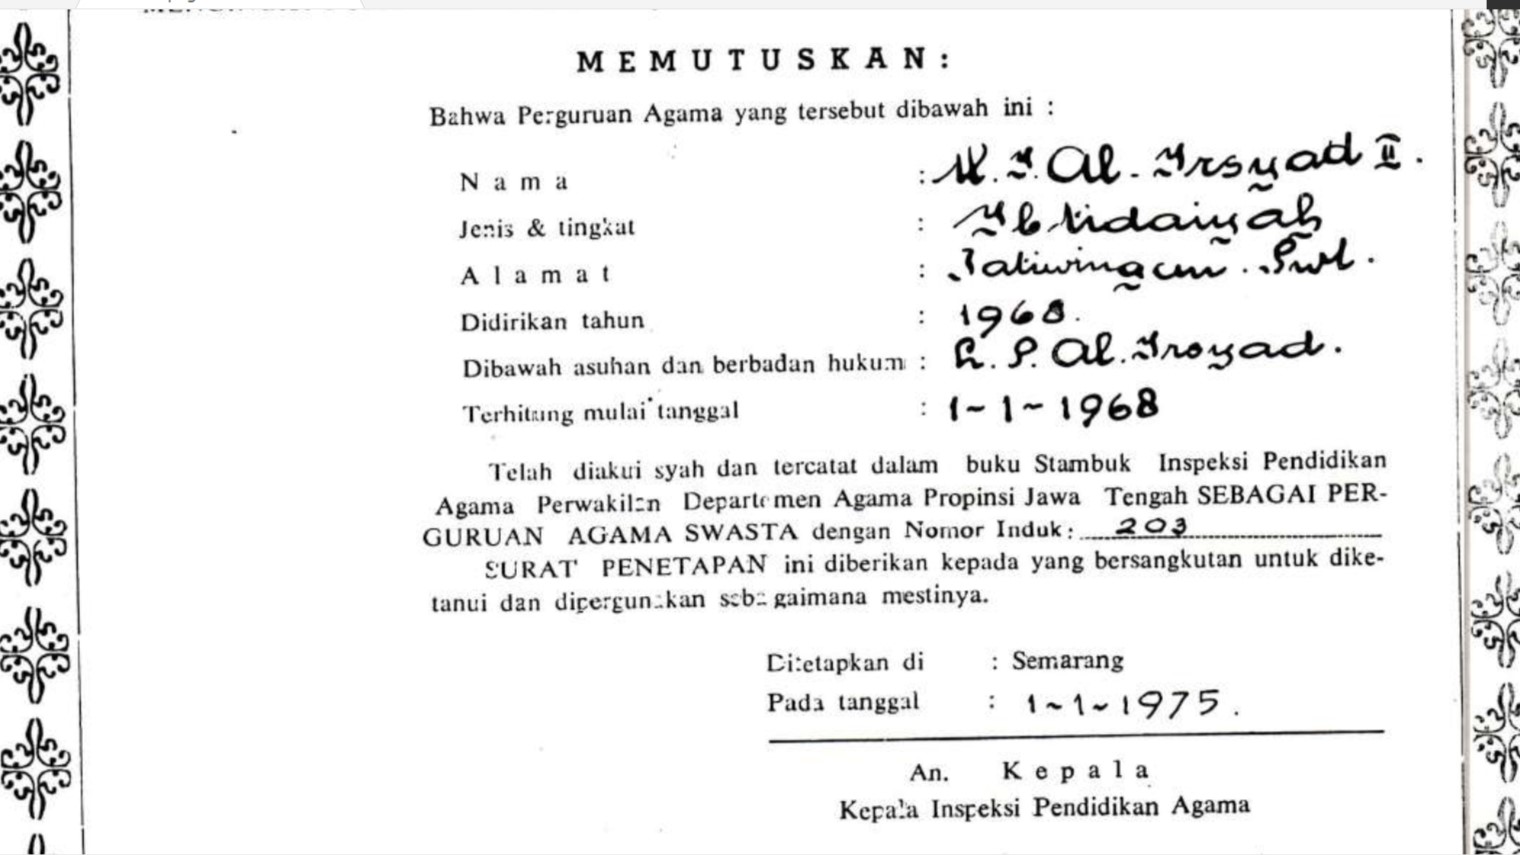 1975. Pengesahan MI Al Irsyad II sebagai Perguruan Swasta Tingkat Ibtidaiyyah